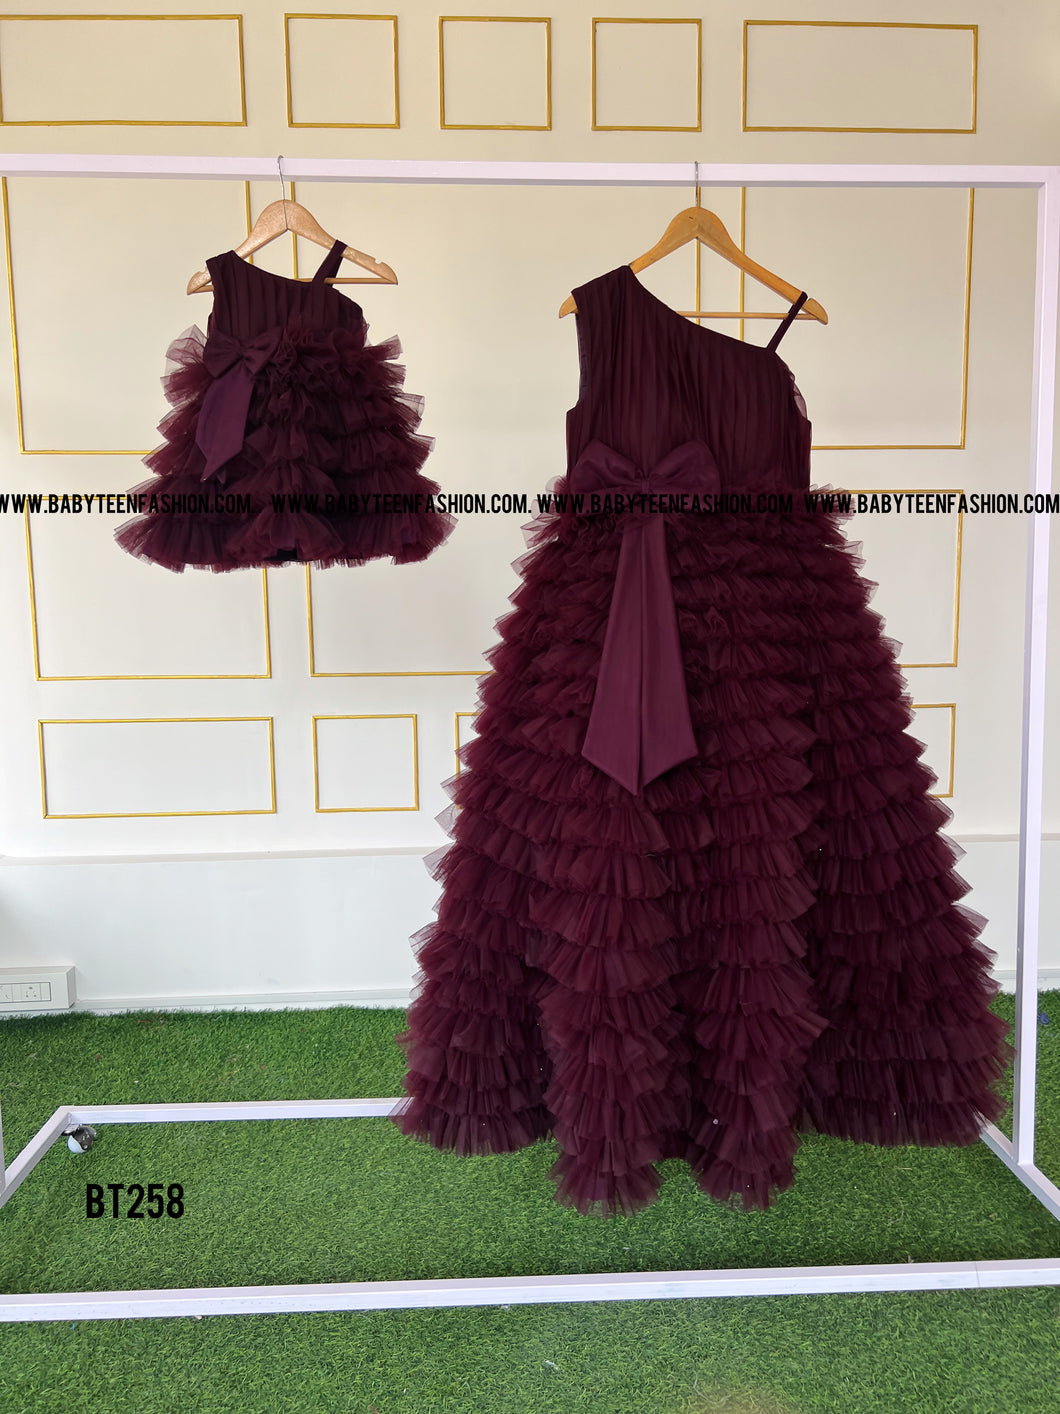 BT258 Regal Ruffle Elegance Dress - A Majestic Match for Mom & Baby!